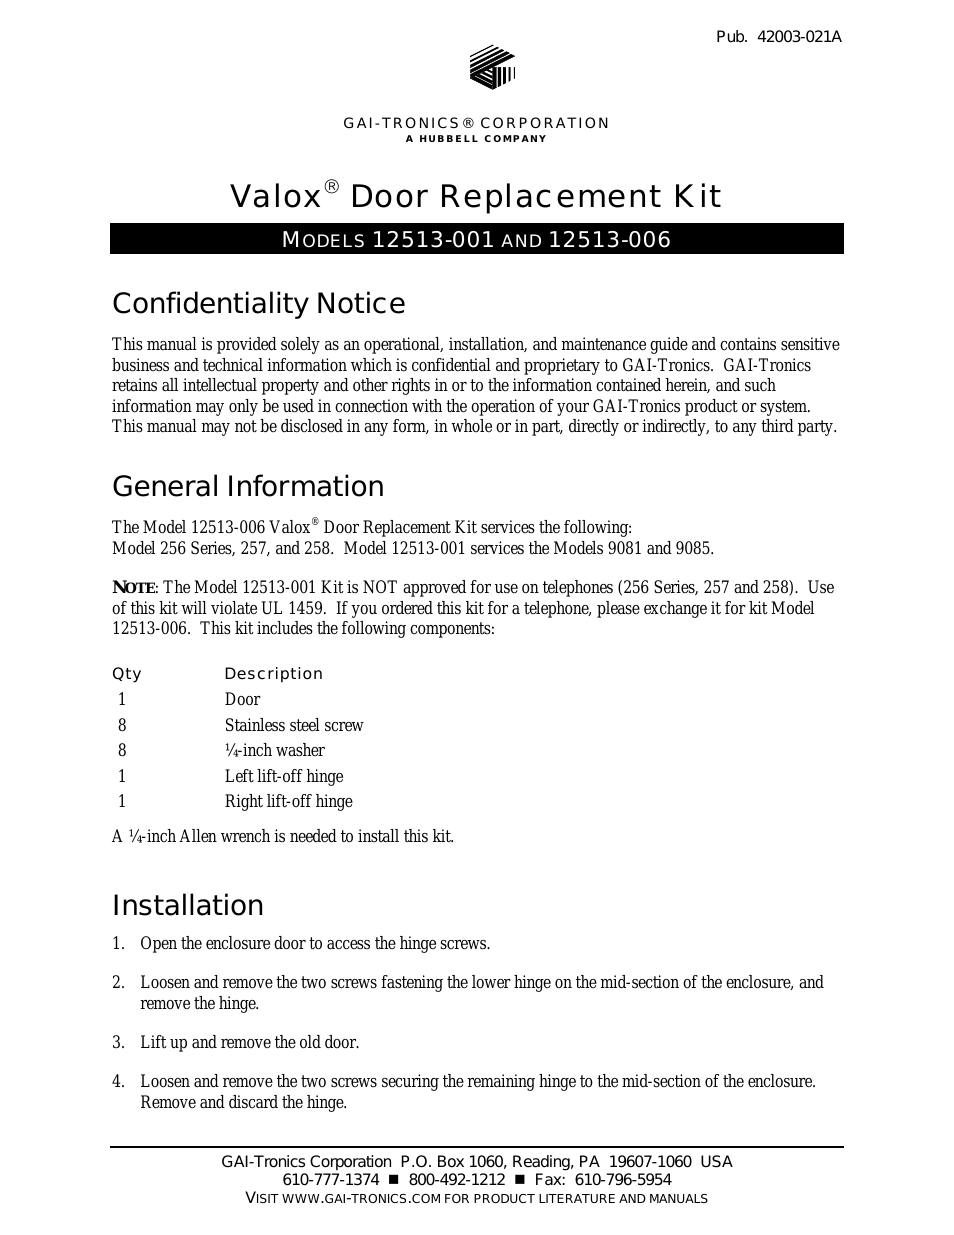 12513-006  Valox Door Kit